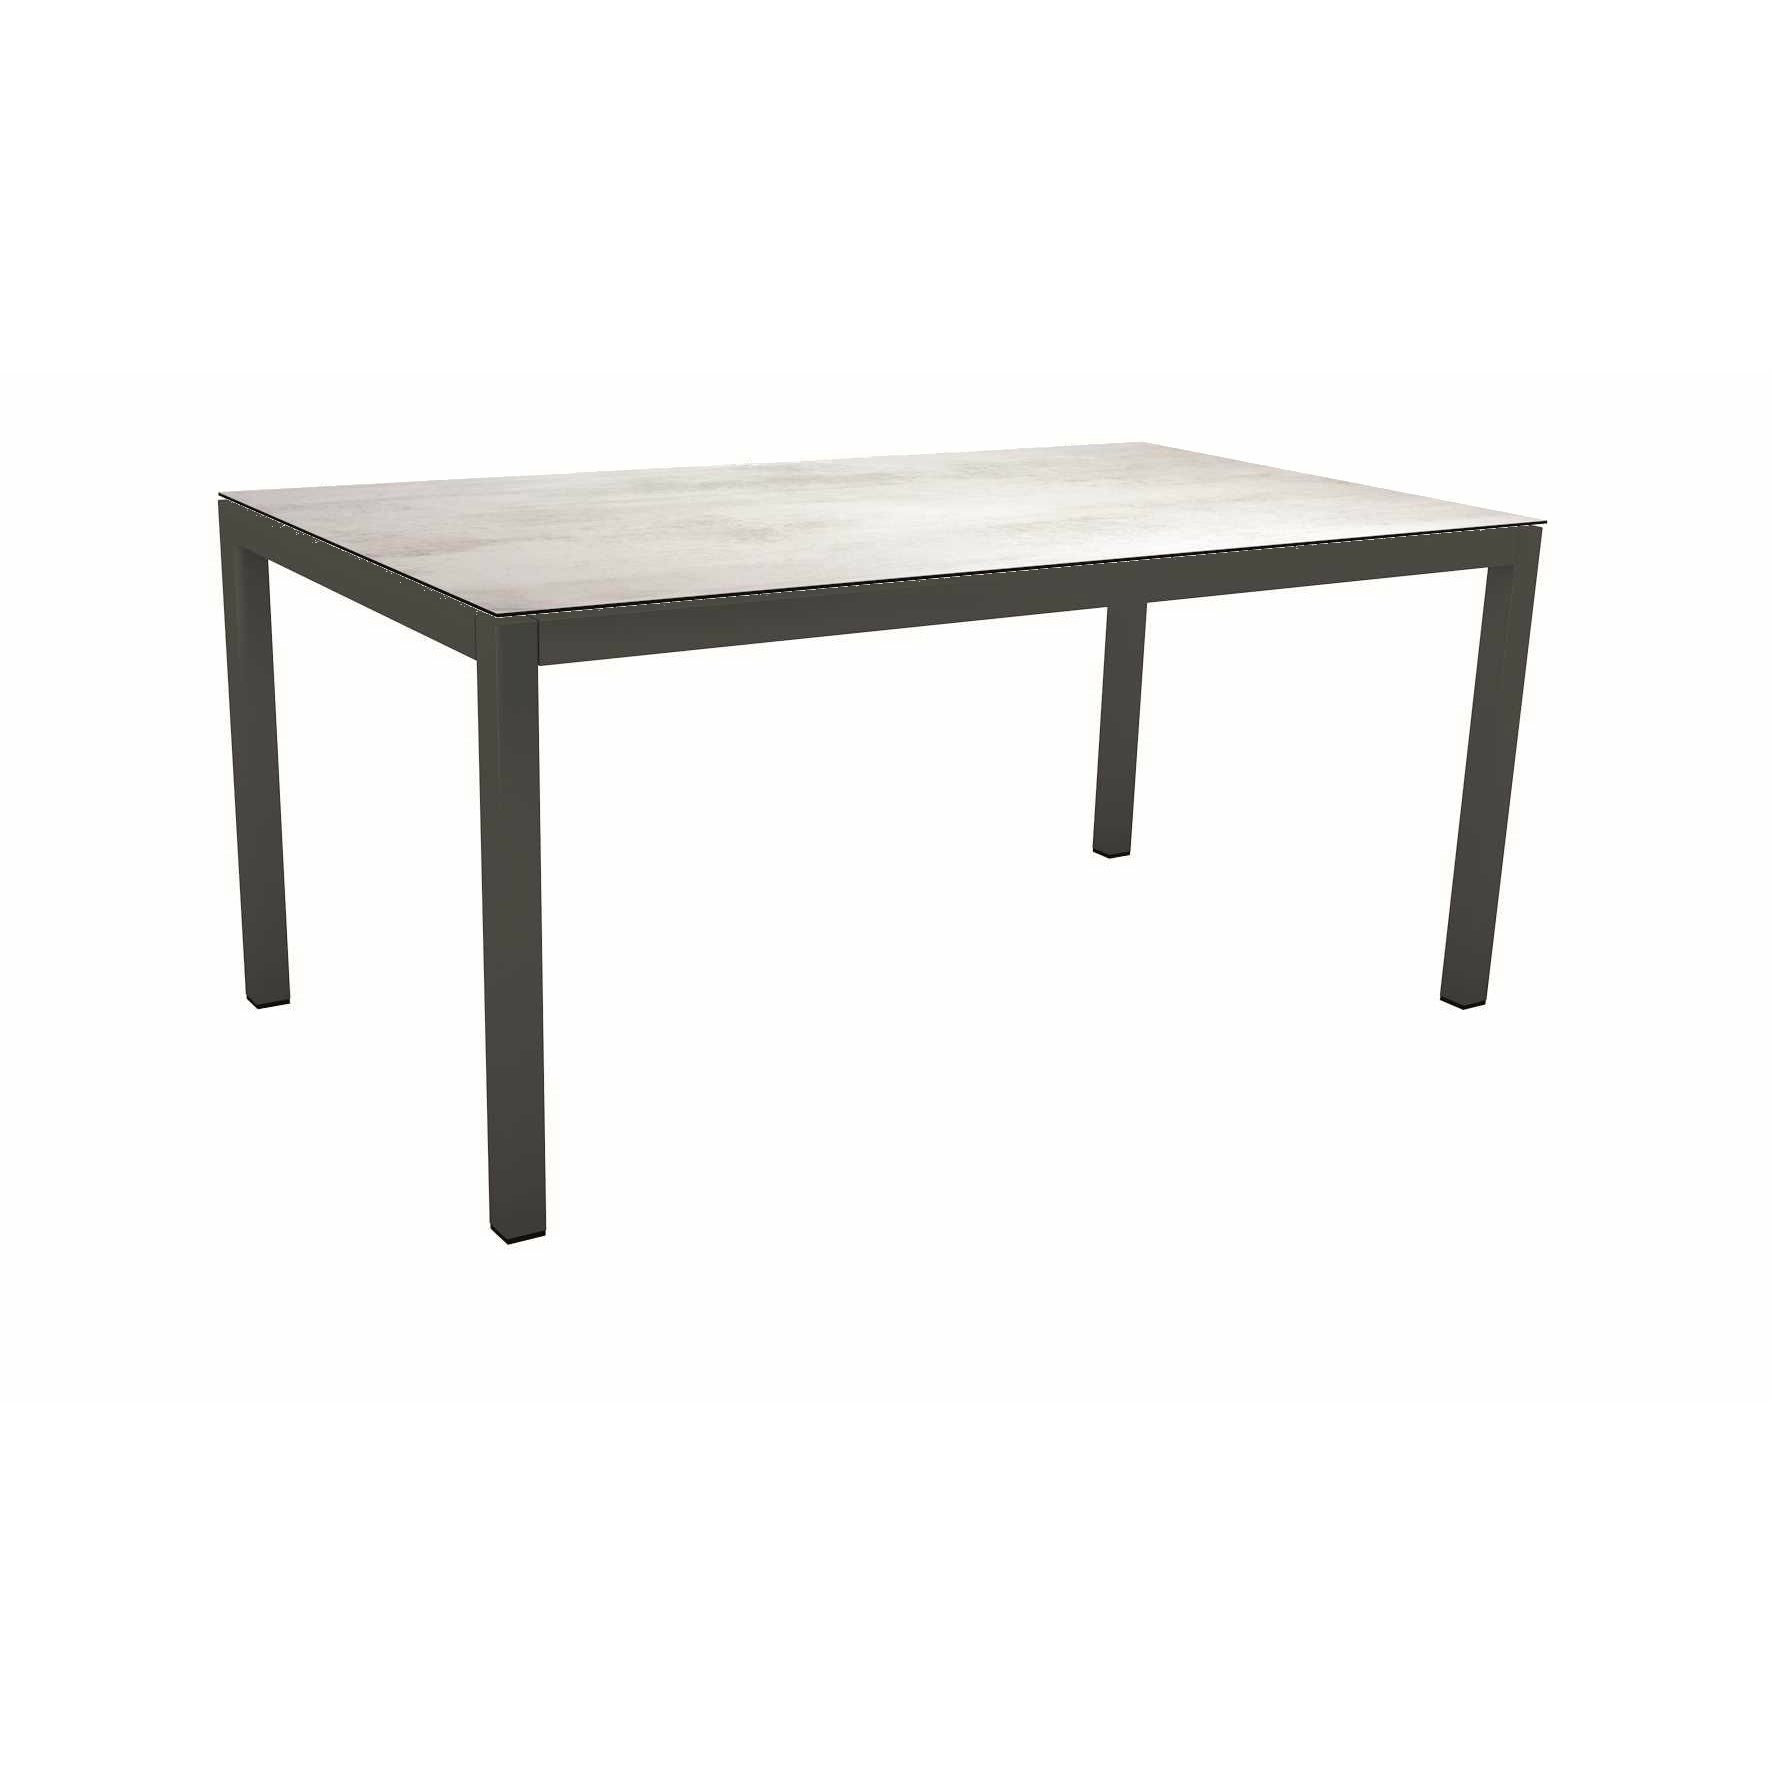 Stern Tischsystem Gartentisch, Gestell Aluminium anthrazit, Tischplatte HPL Zement hell, Maße: 130x80 cm